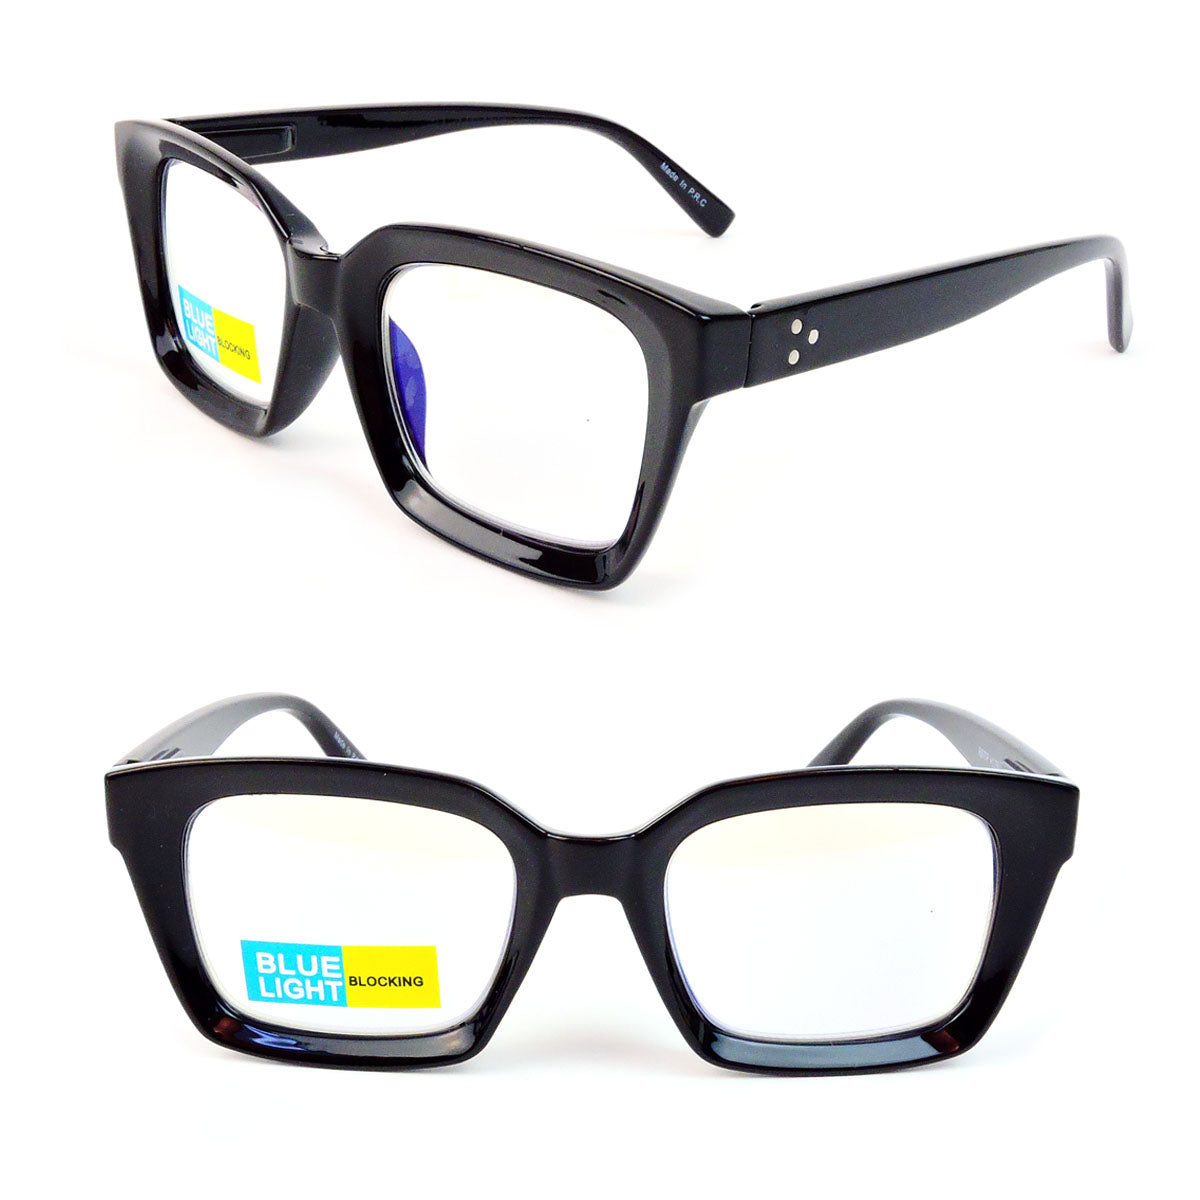 Blue Light Blocking Glasses Thick Rectangle Preppy Look - Reading Glasses - Black, +1.50